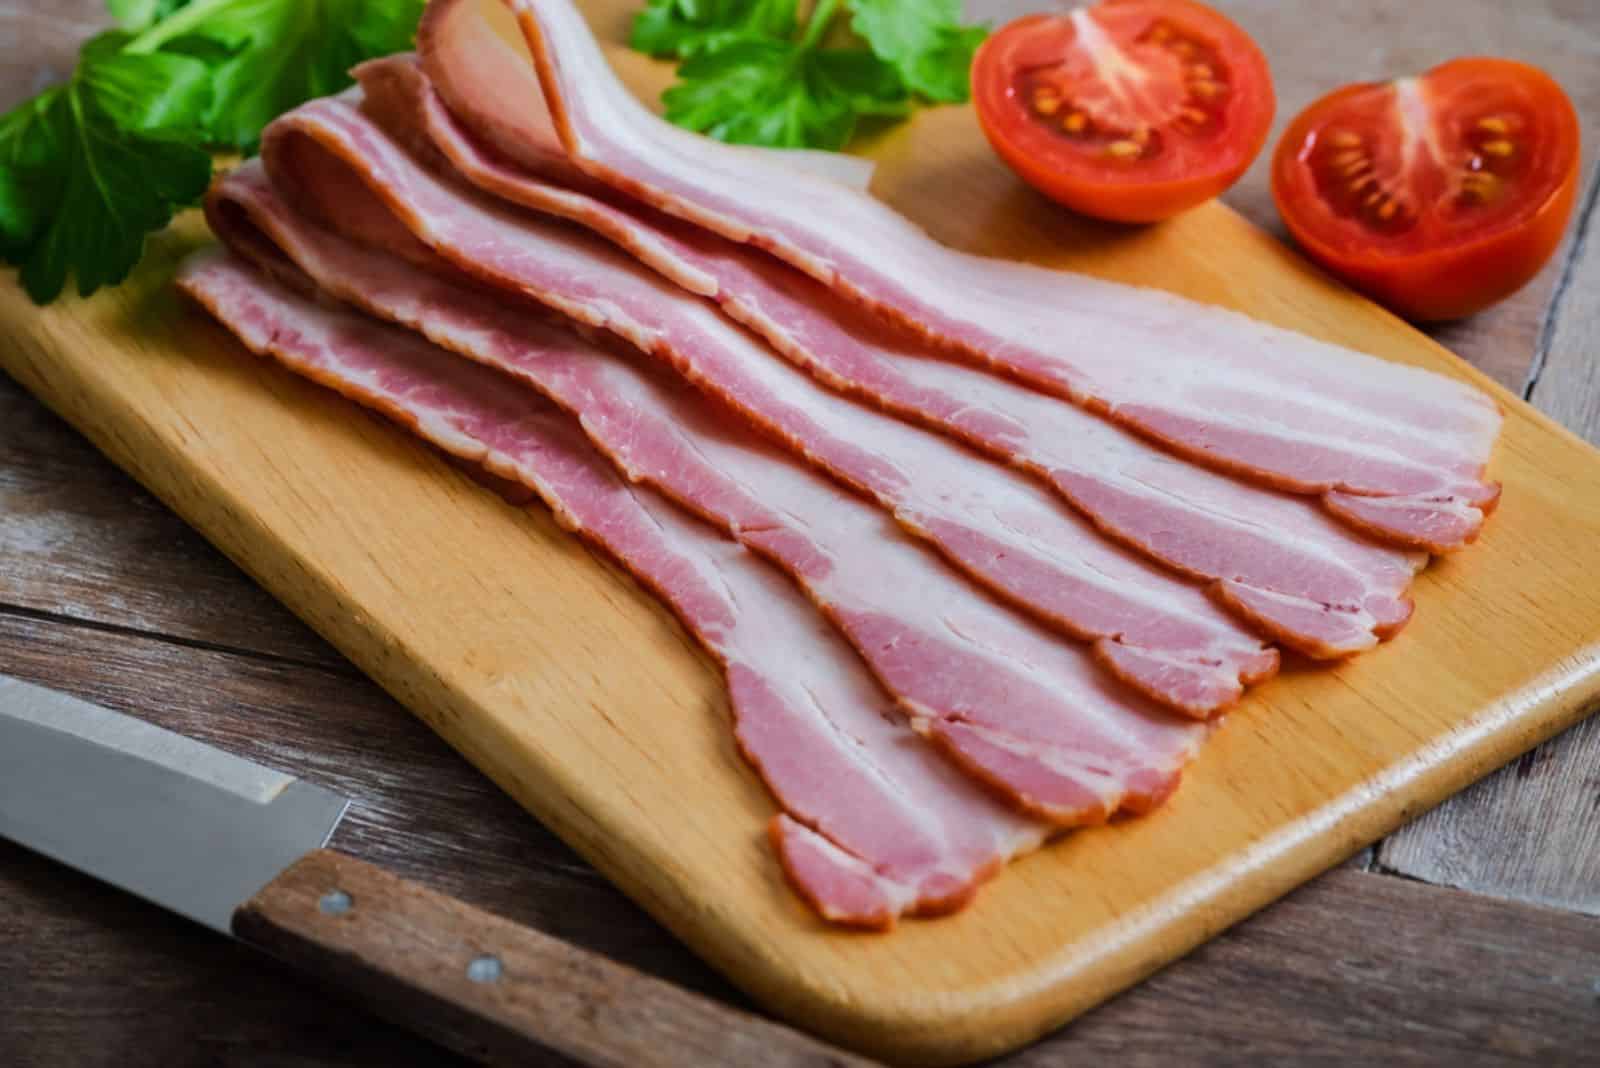 Raw sliced bacon on wooden board